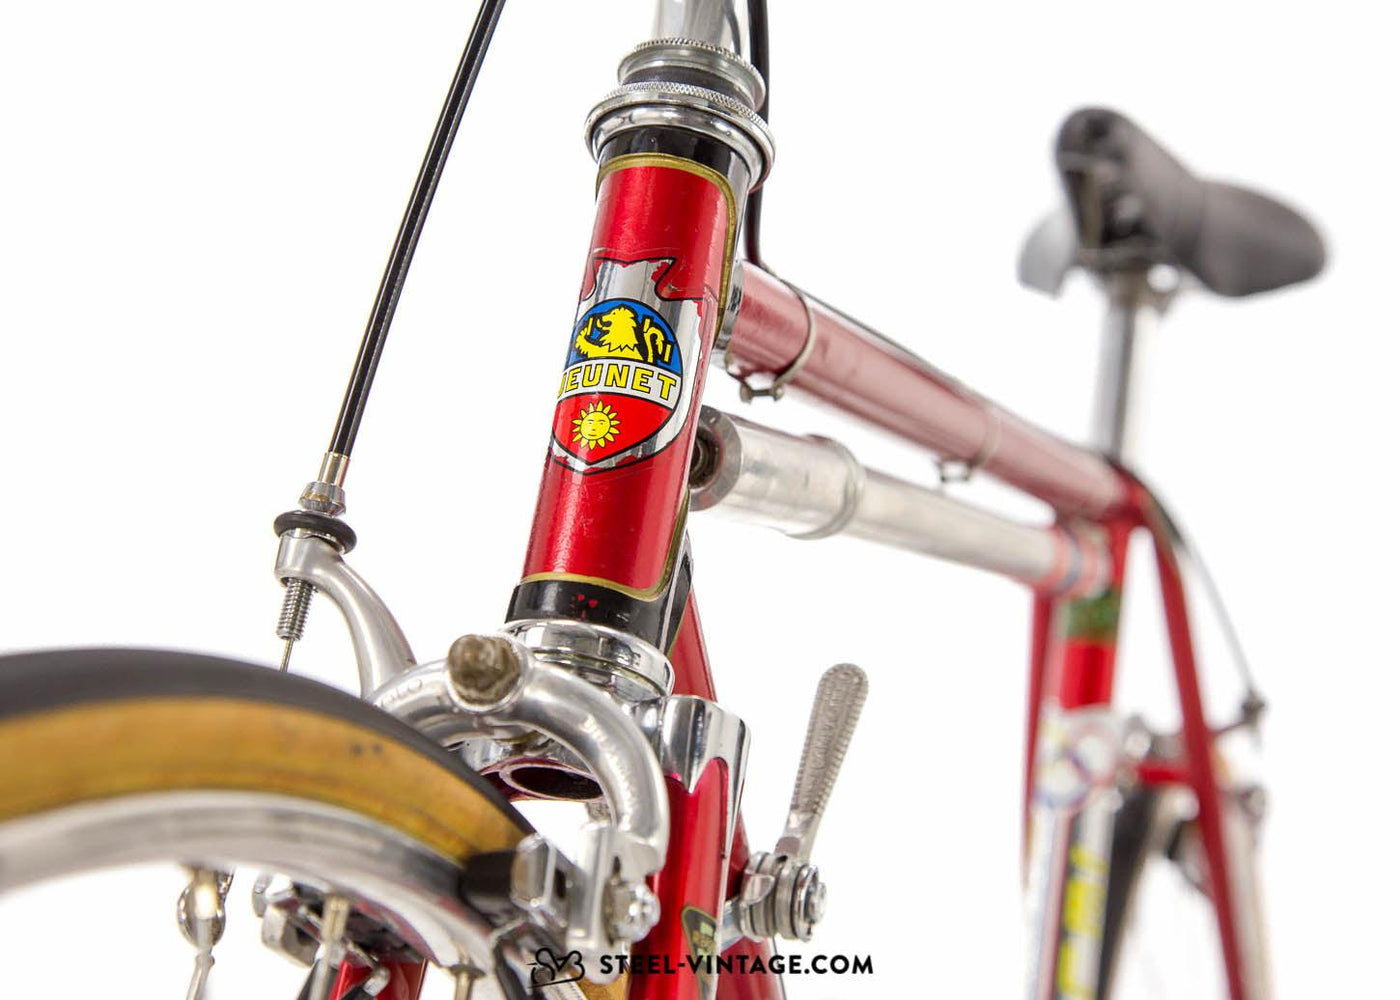 Jeunet Champion Mondial Classic Road Bike 1970s - Steel Vintage Bikes